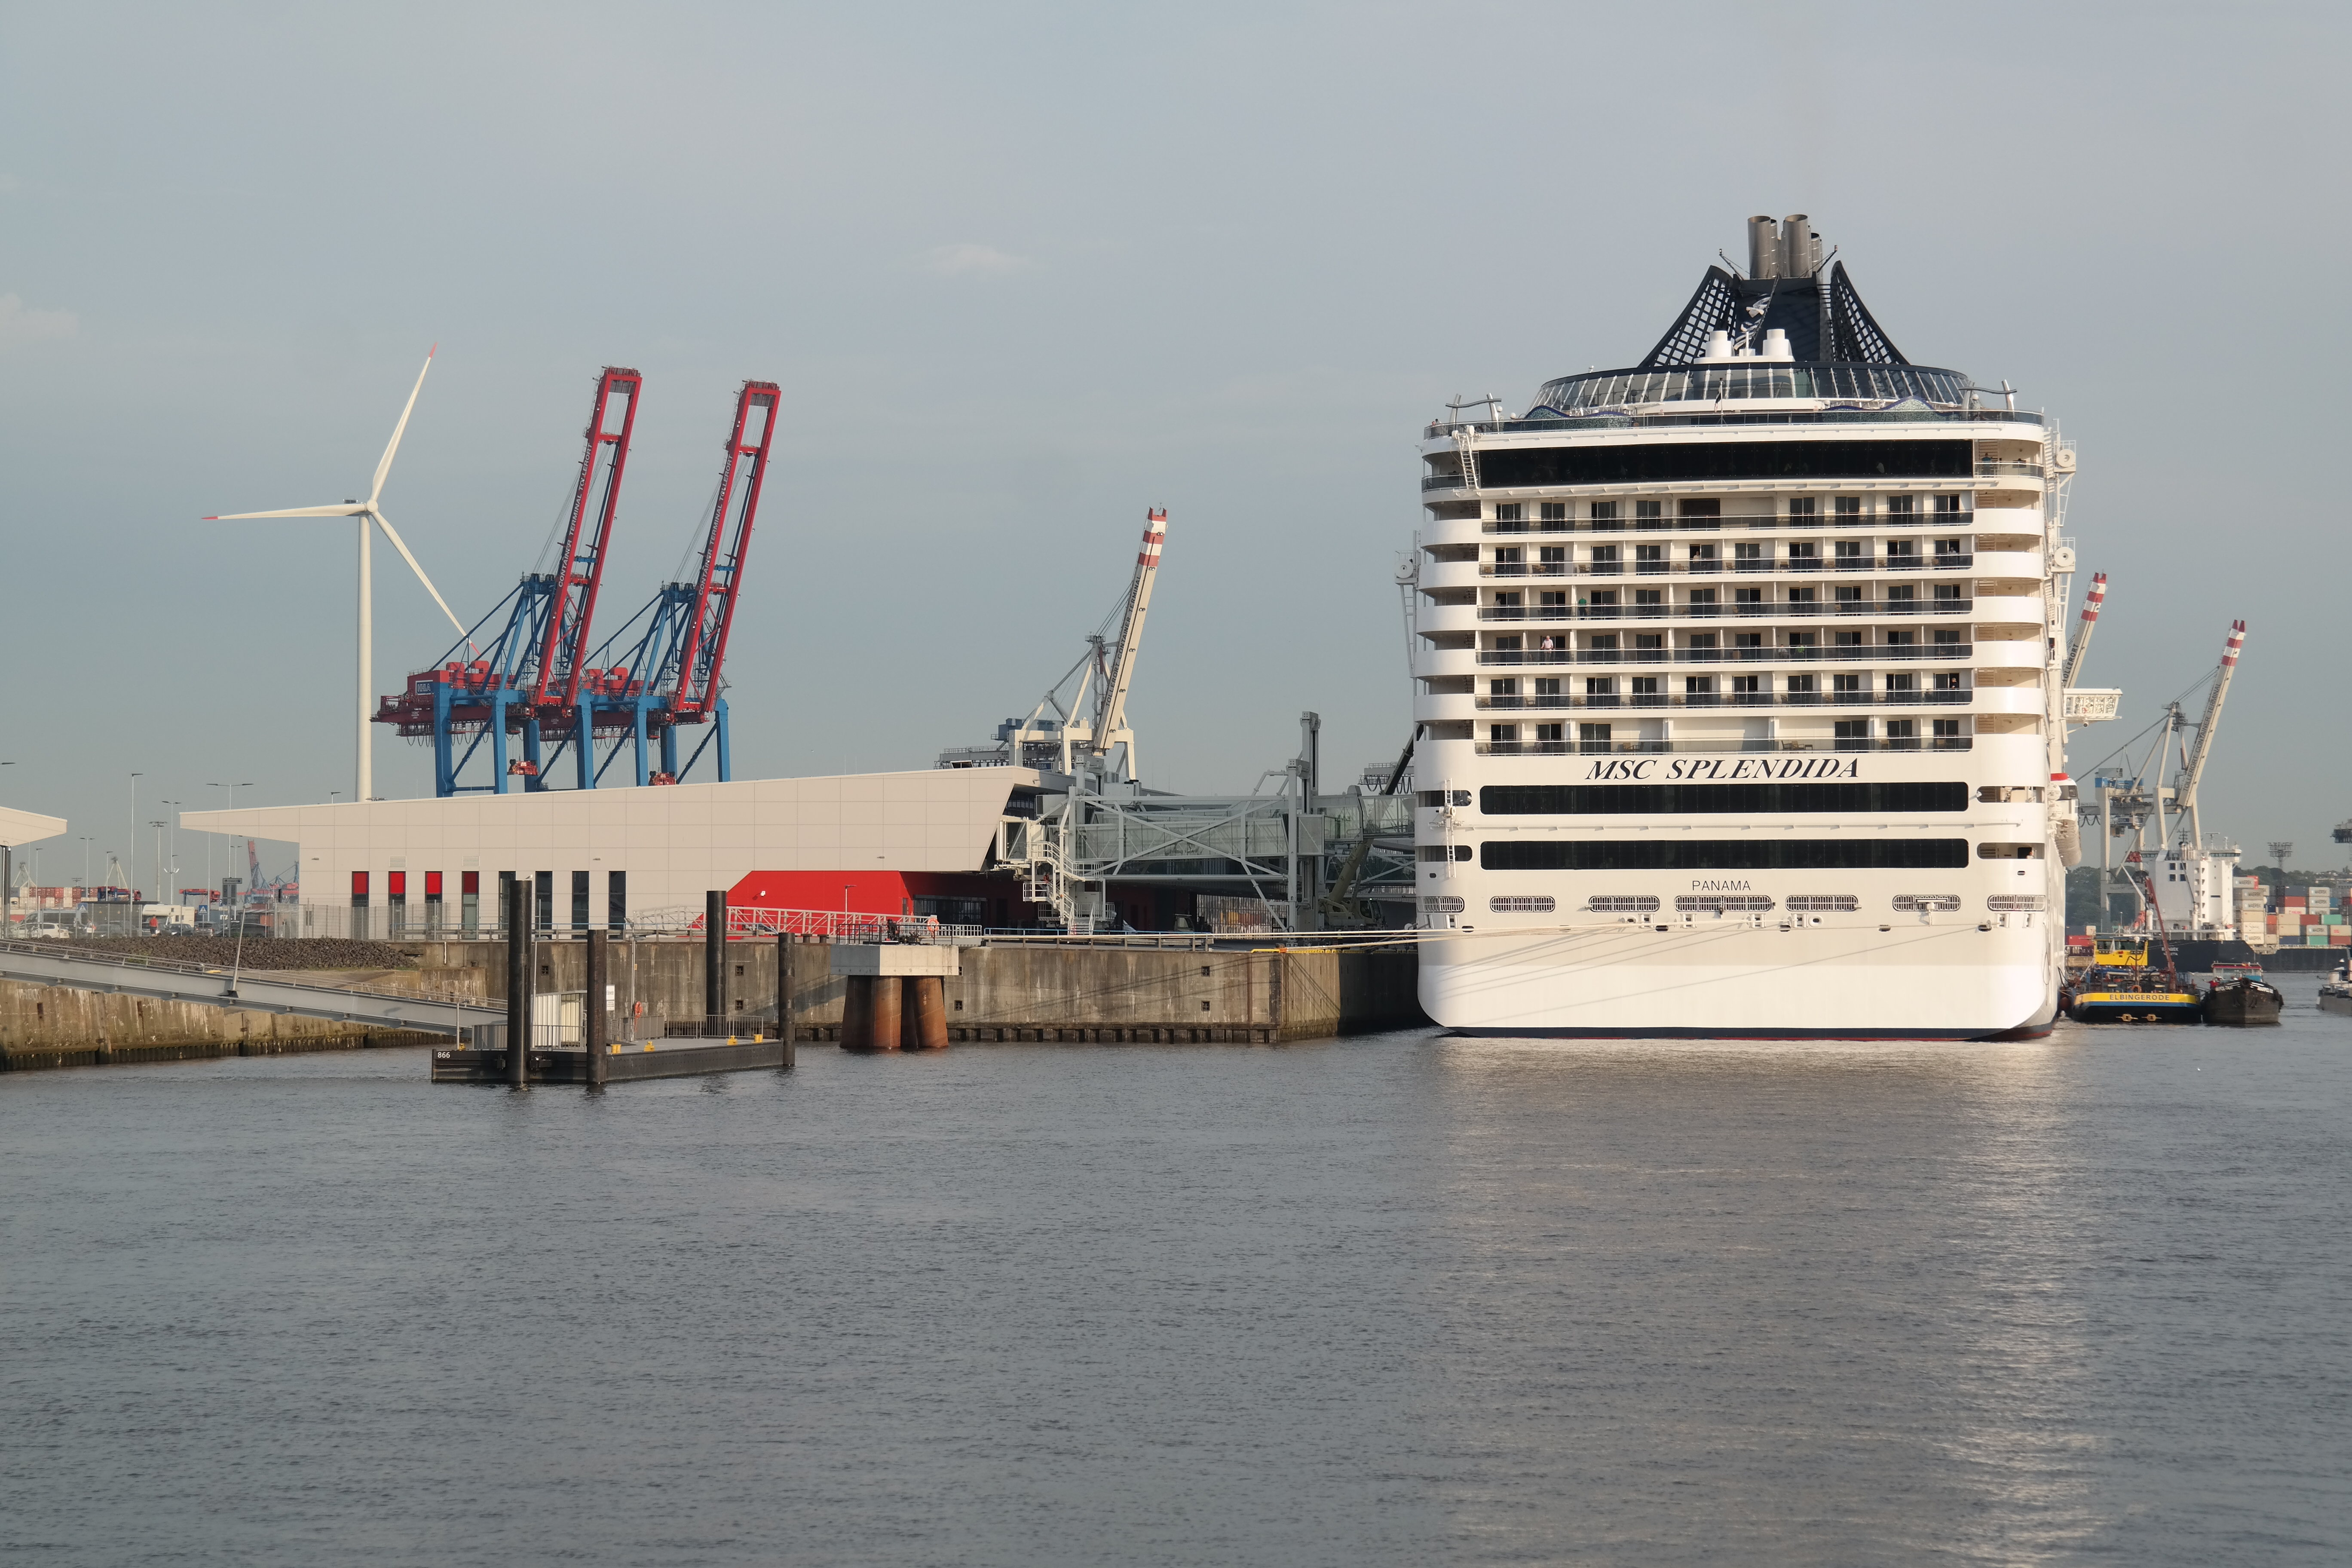 Docking cruise ship